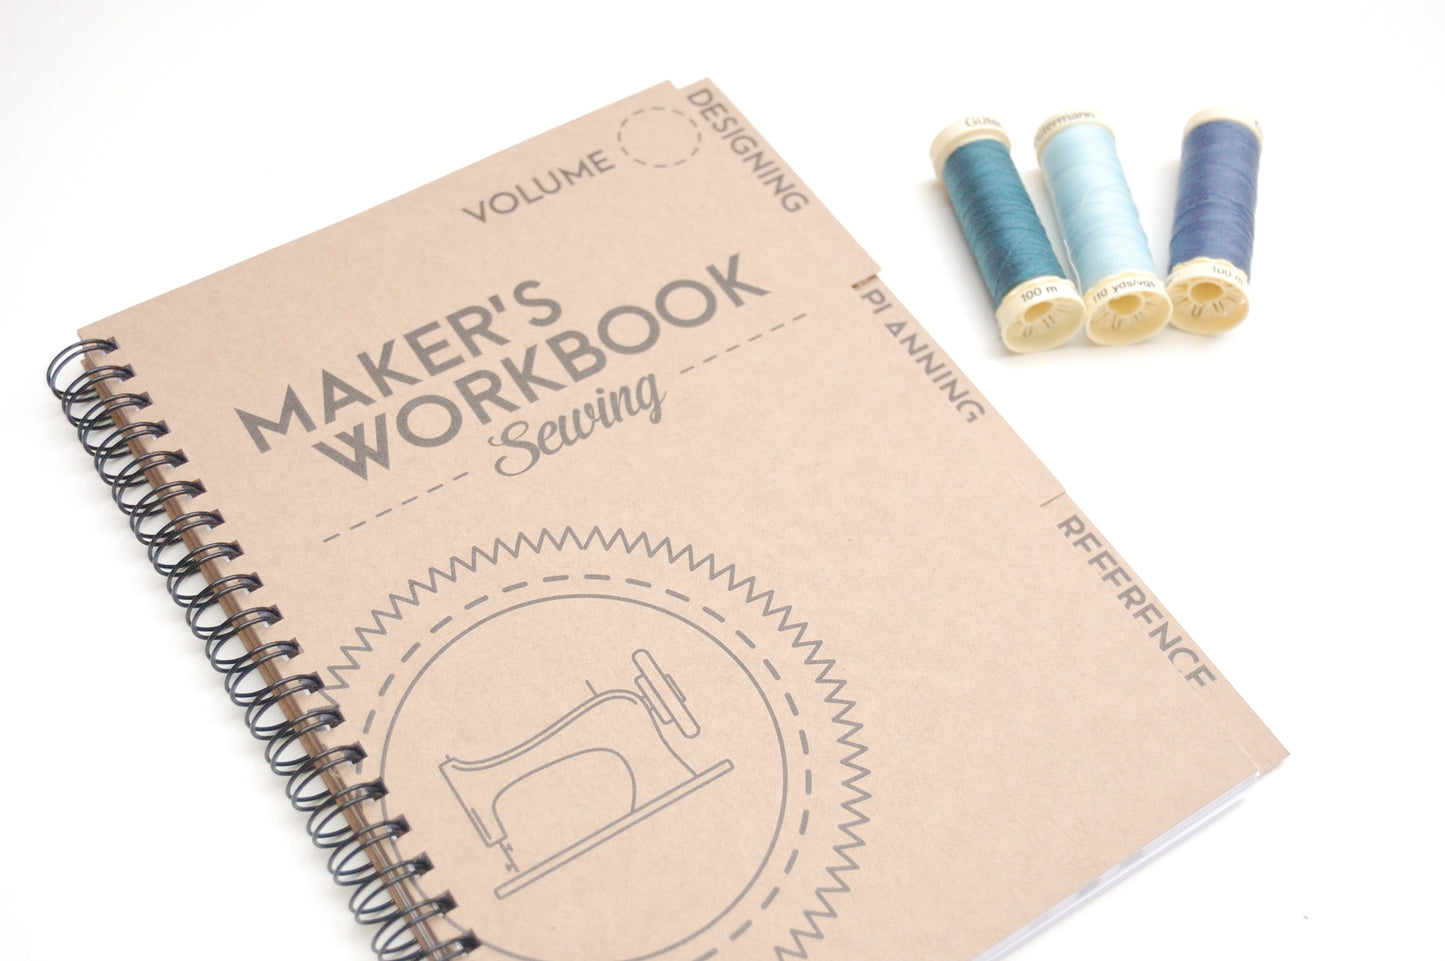 Maker's Workbook: Sewing